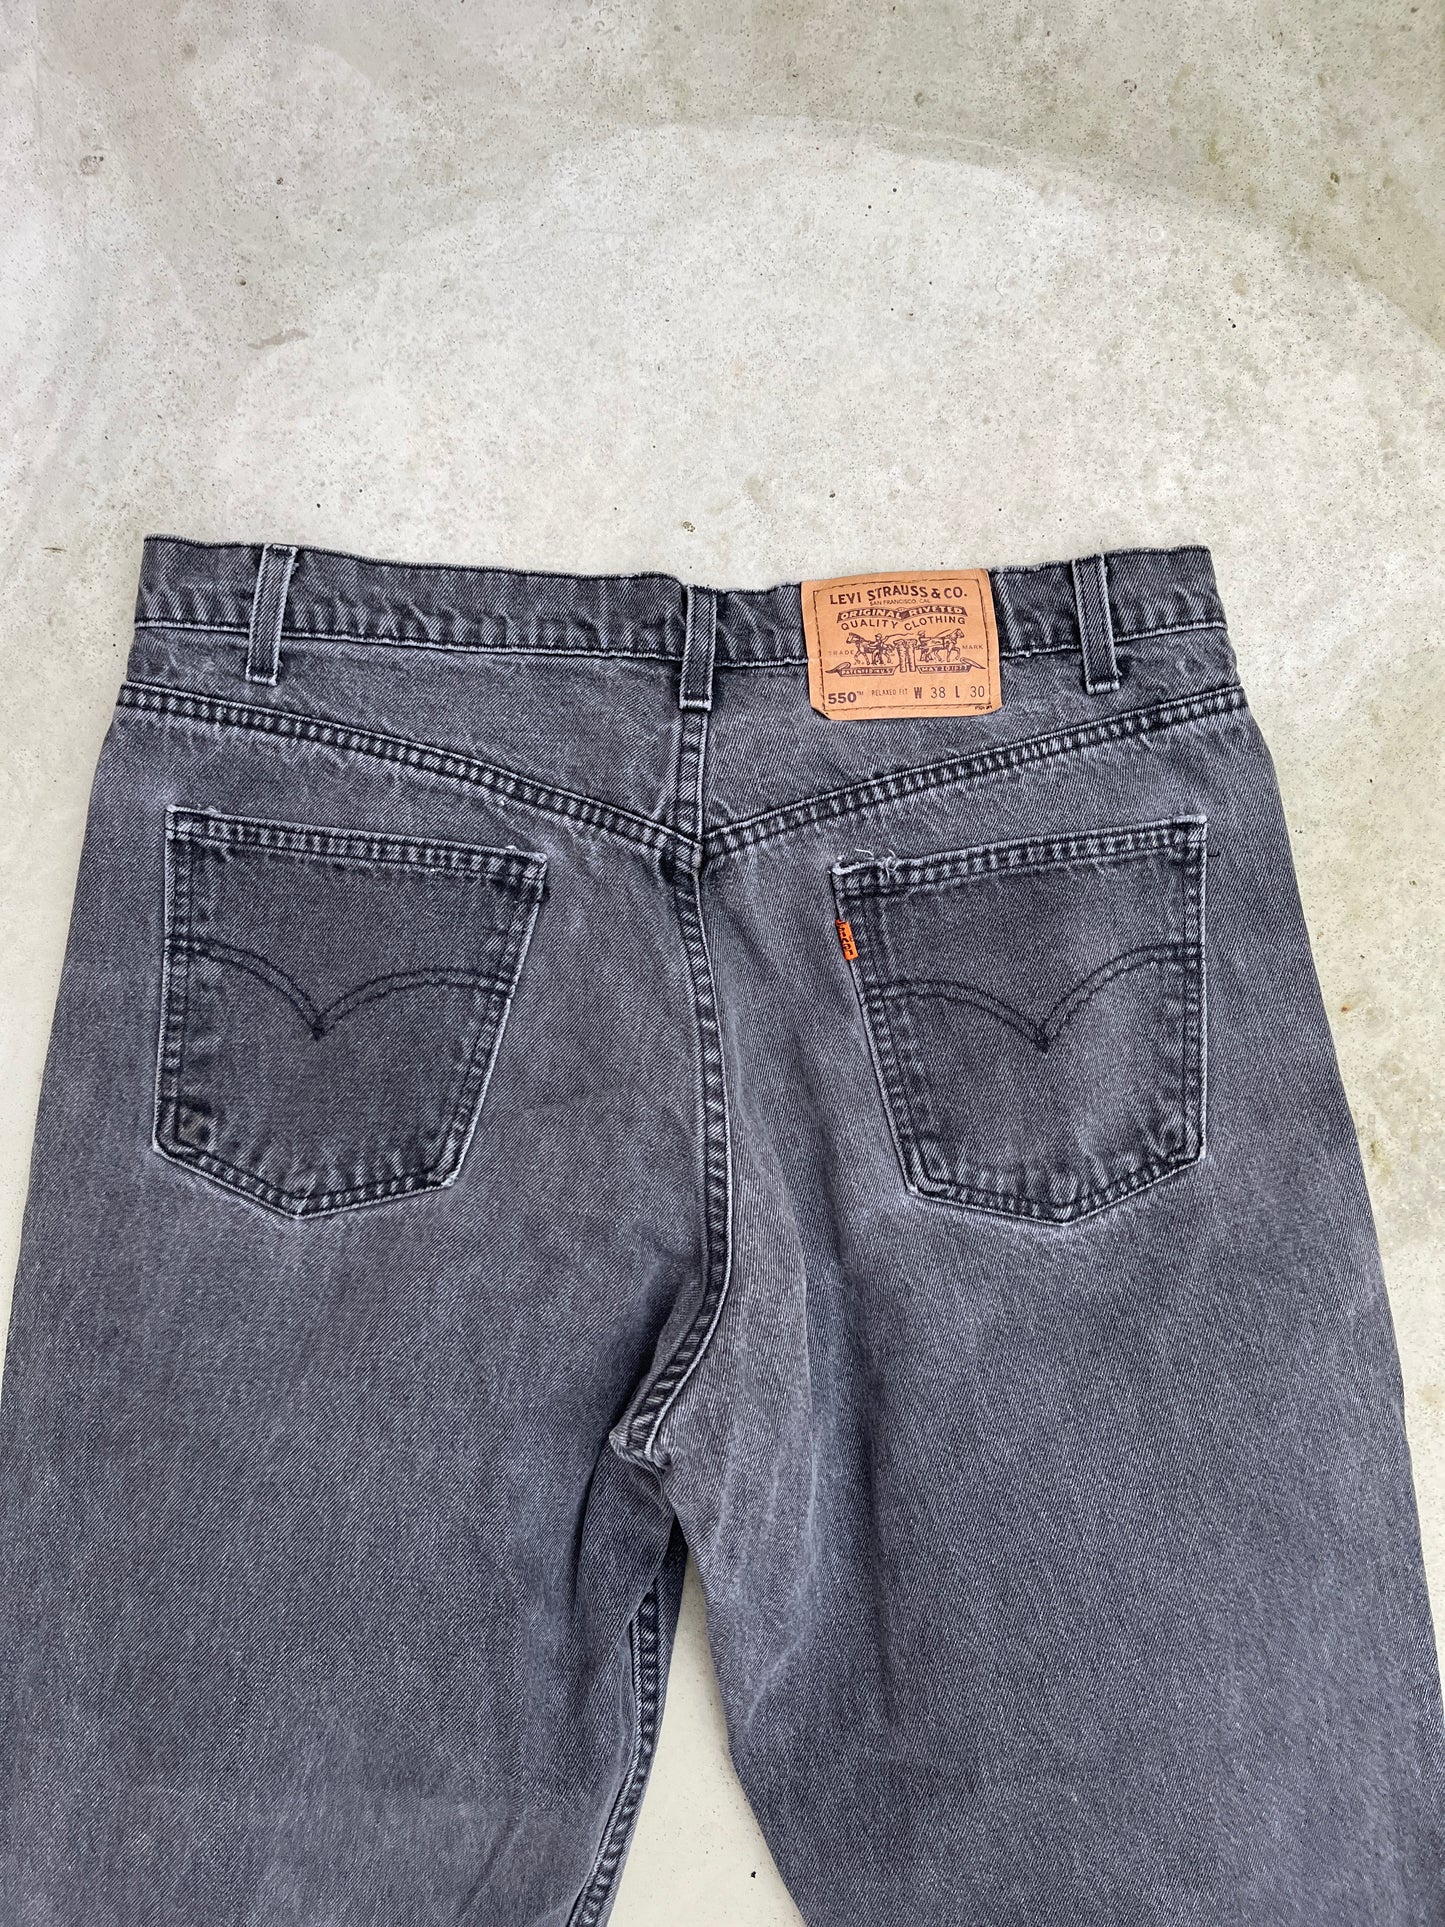 Levis 505 Jeans Orange Tab - 1980’s